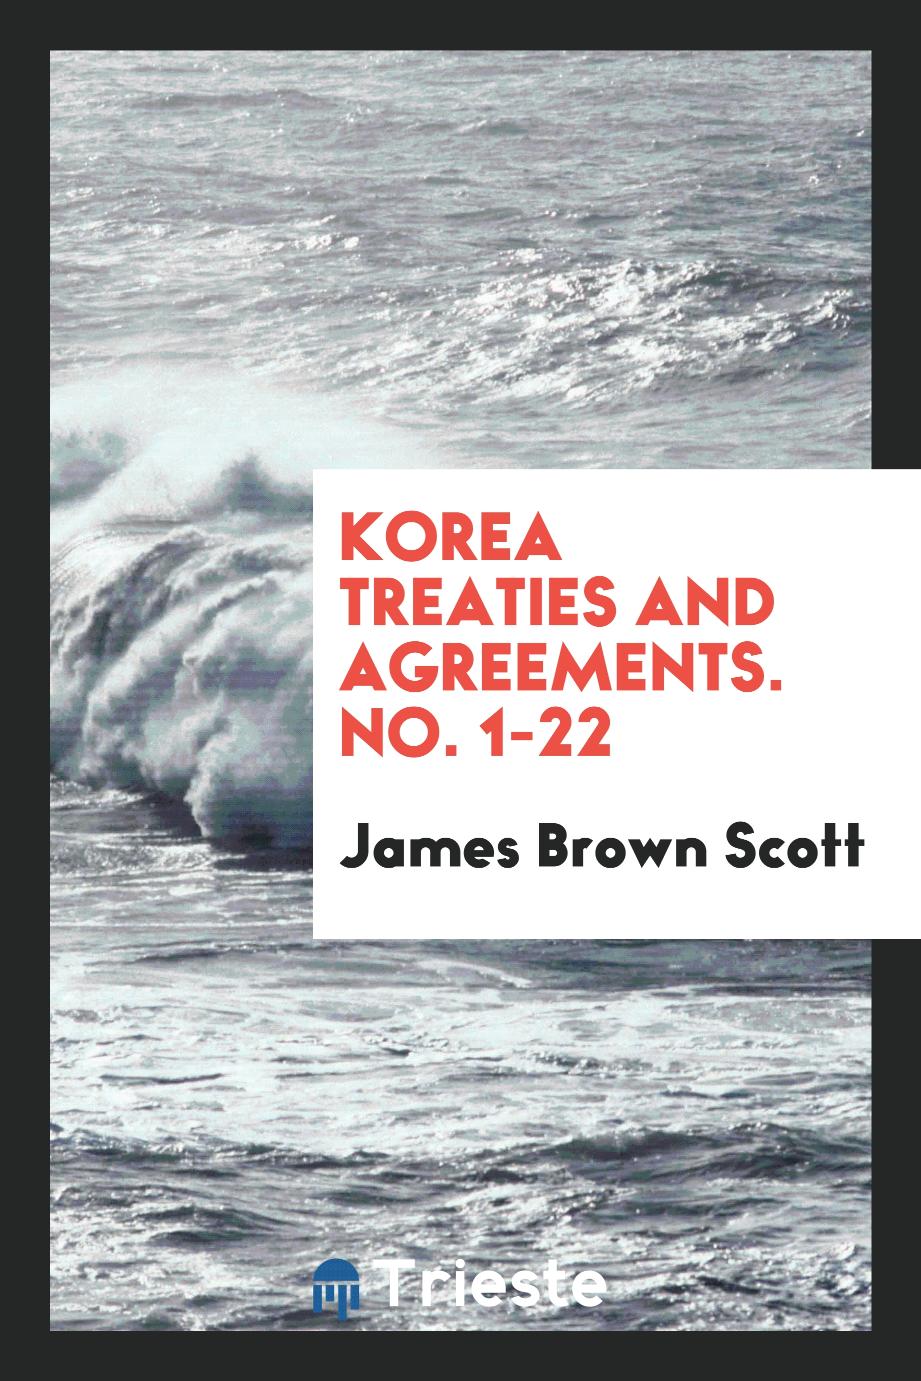 Korea treaties and agreements. No. 1-22